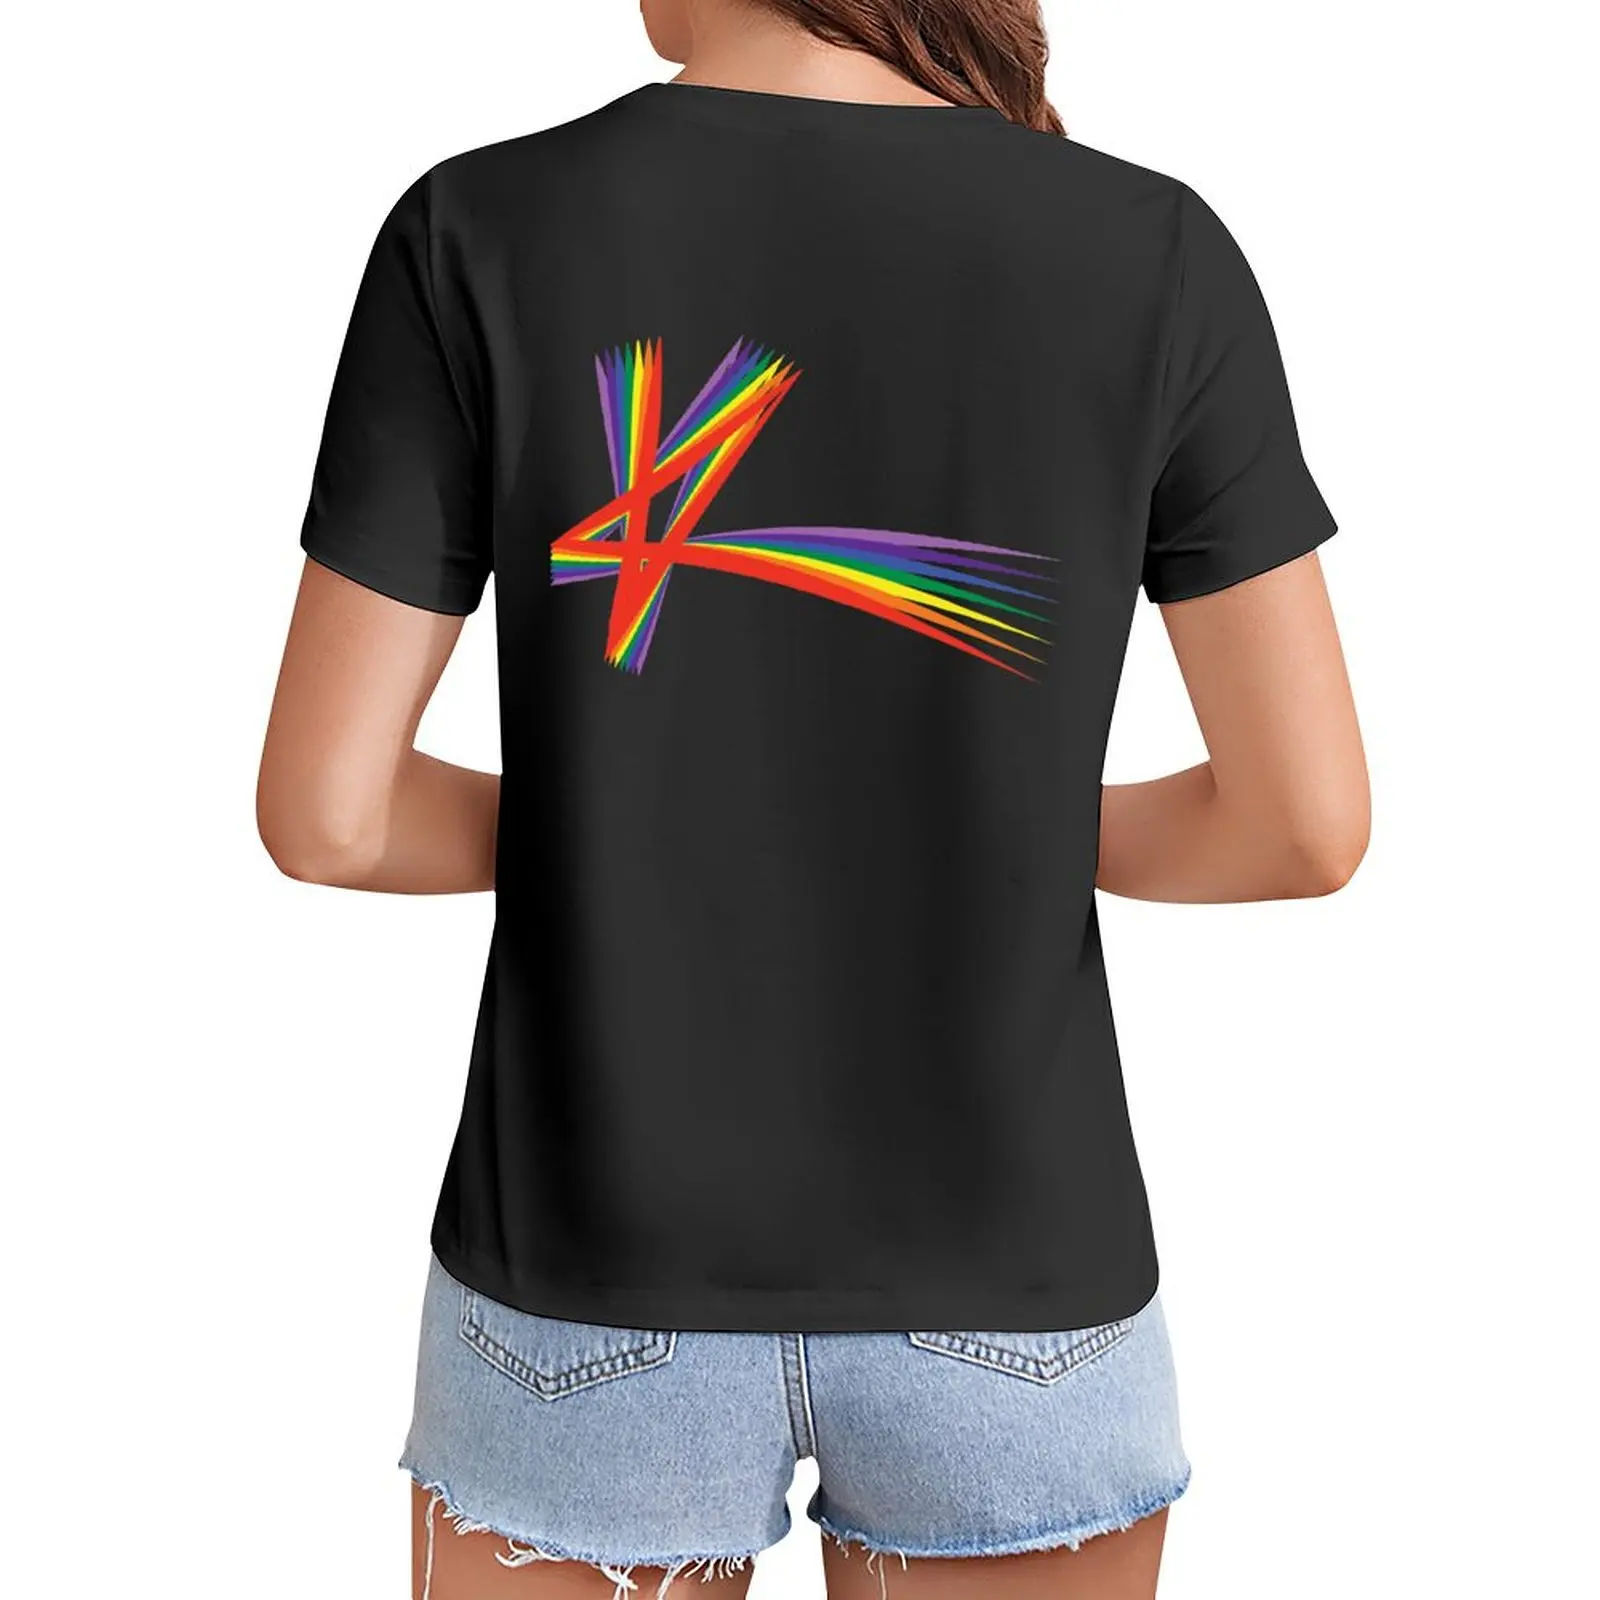 

K Pride T-Shirt Short sleeve tee plus size tops Blouse customs tops Women